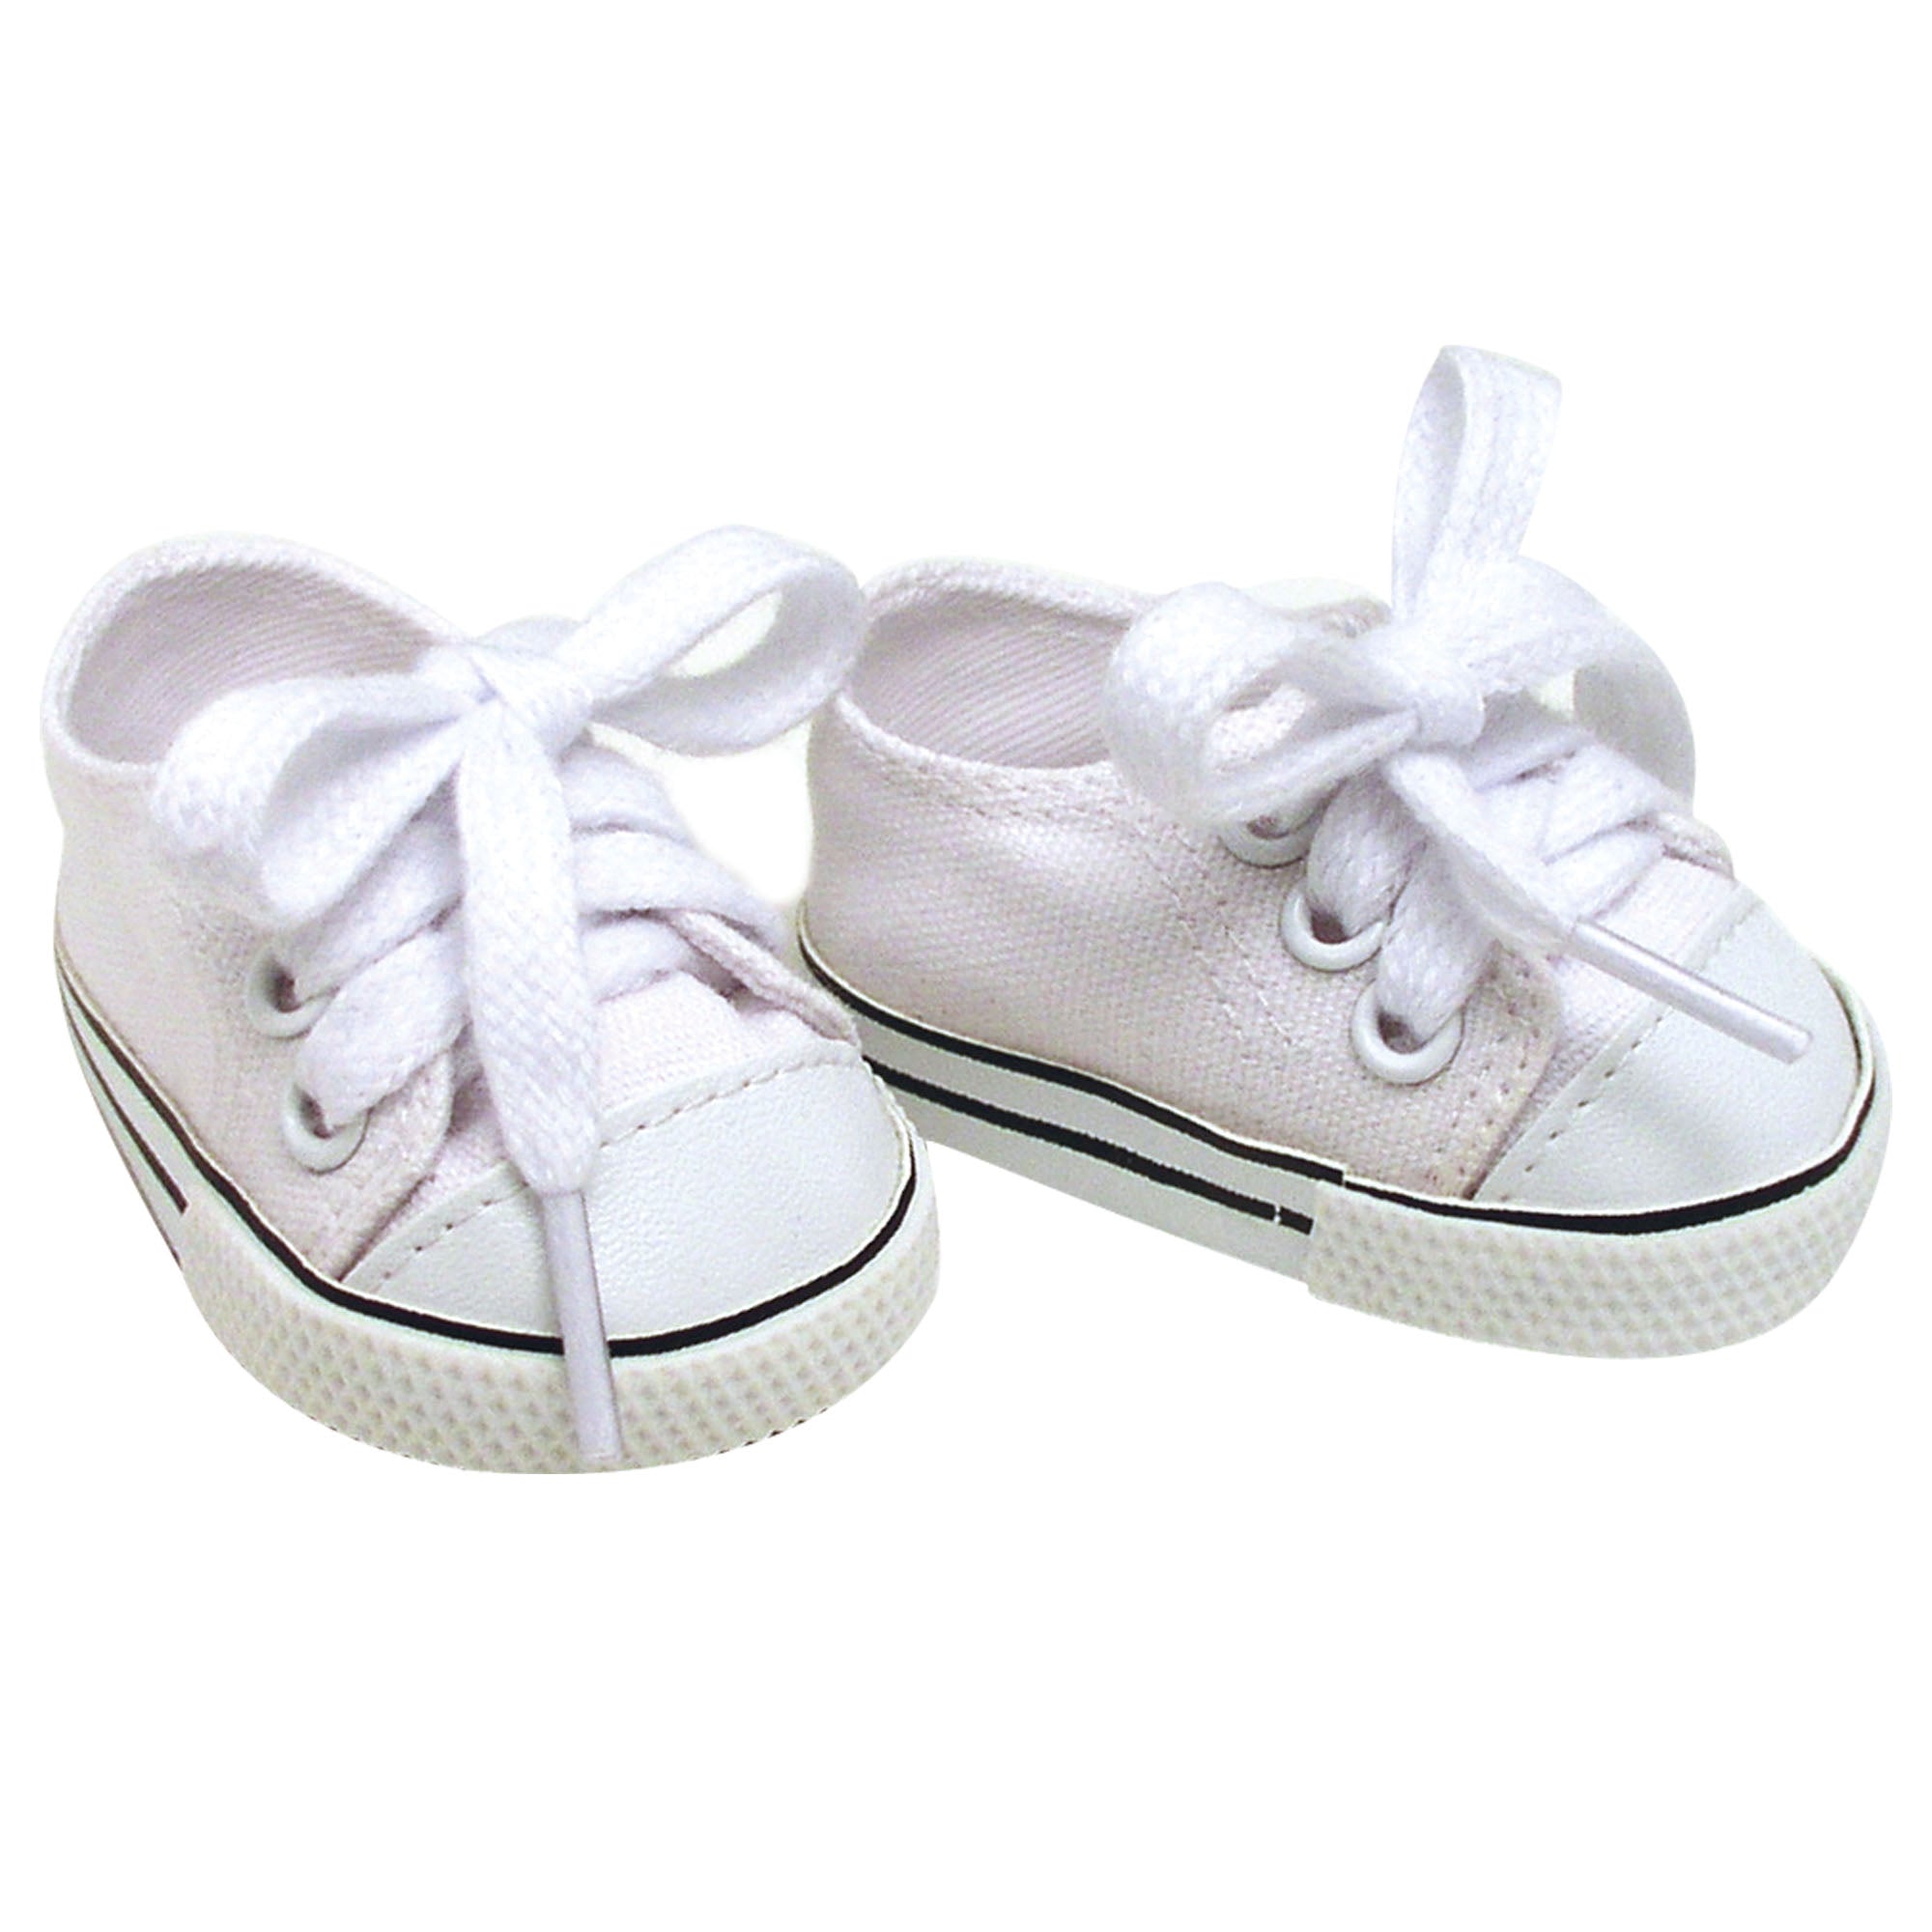 Sophias White Canvas Sneaker Shoes with Laces for 18" Dolls